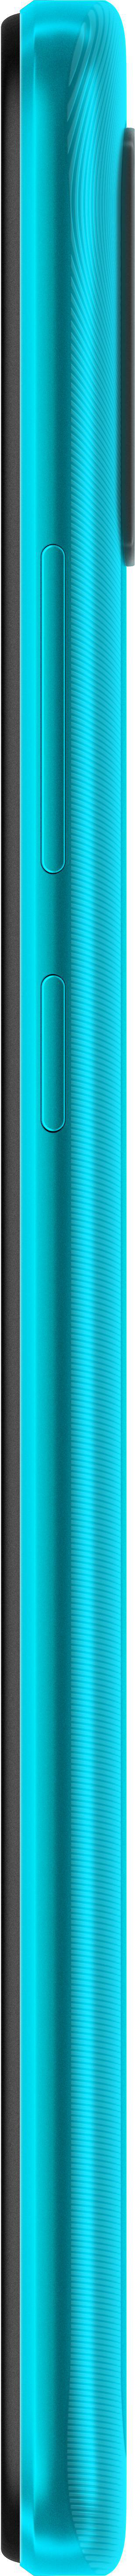 32 REDMI XIAOMI Green 9A Peacock GB Dual SIM